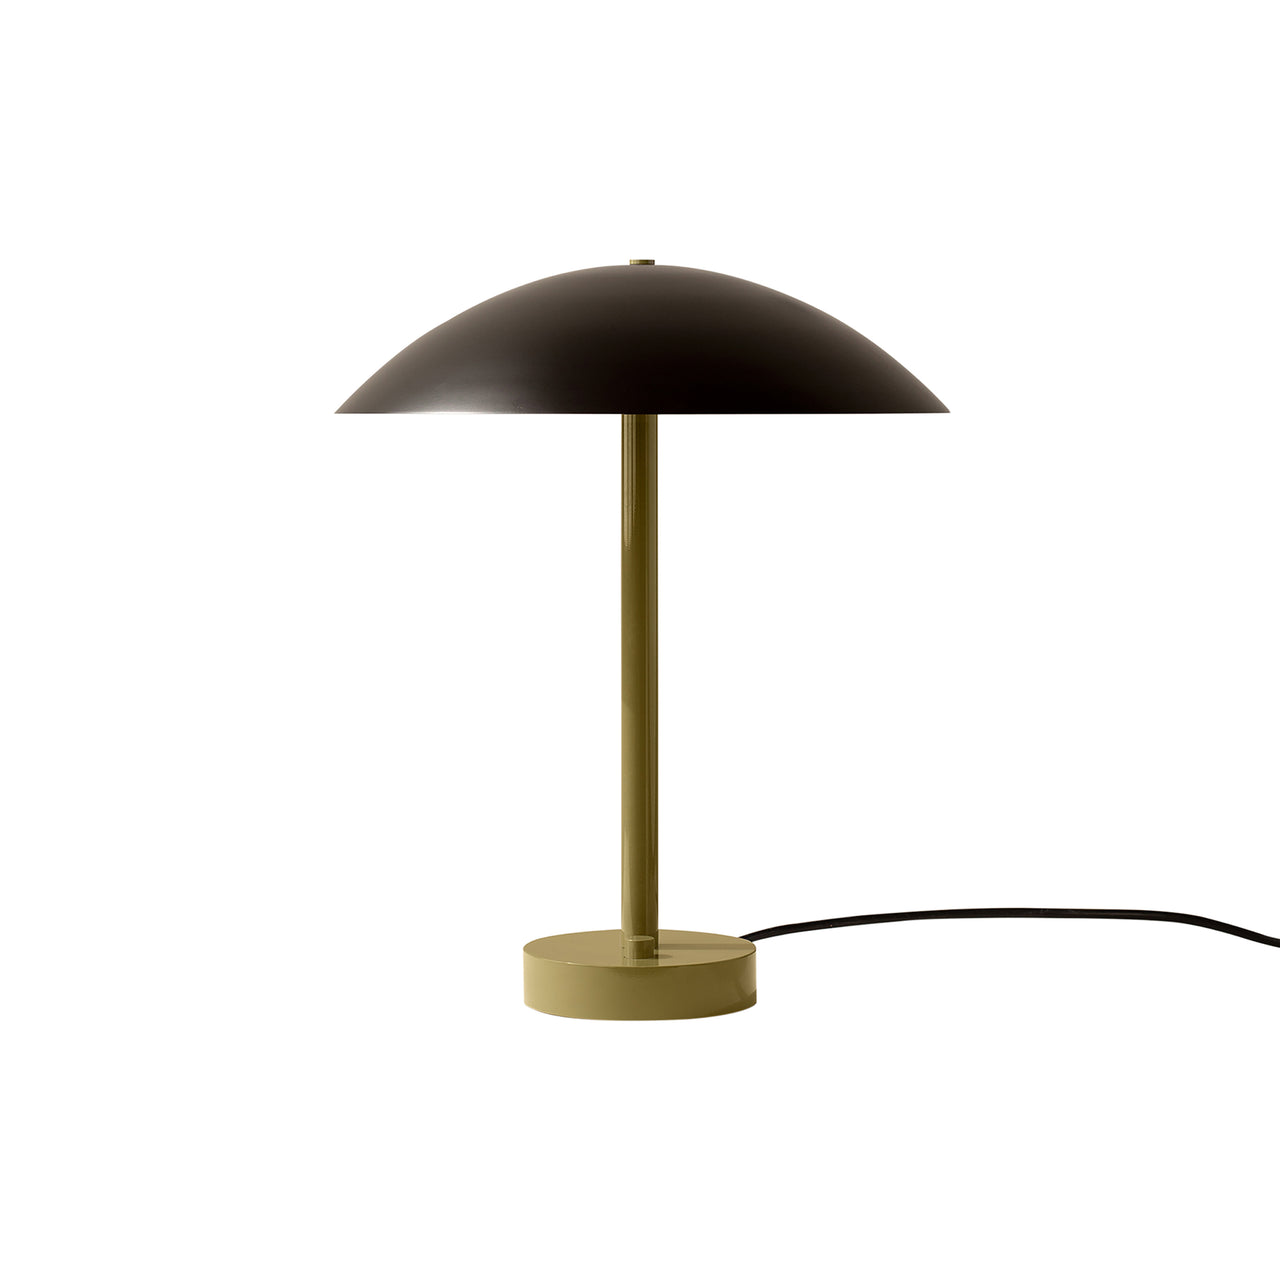 Arundel Table Lamp: Black + Reed Green